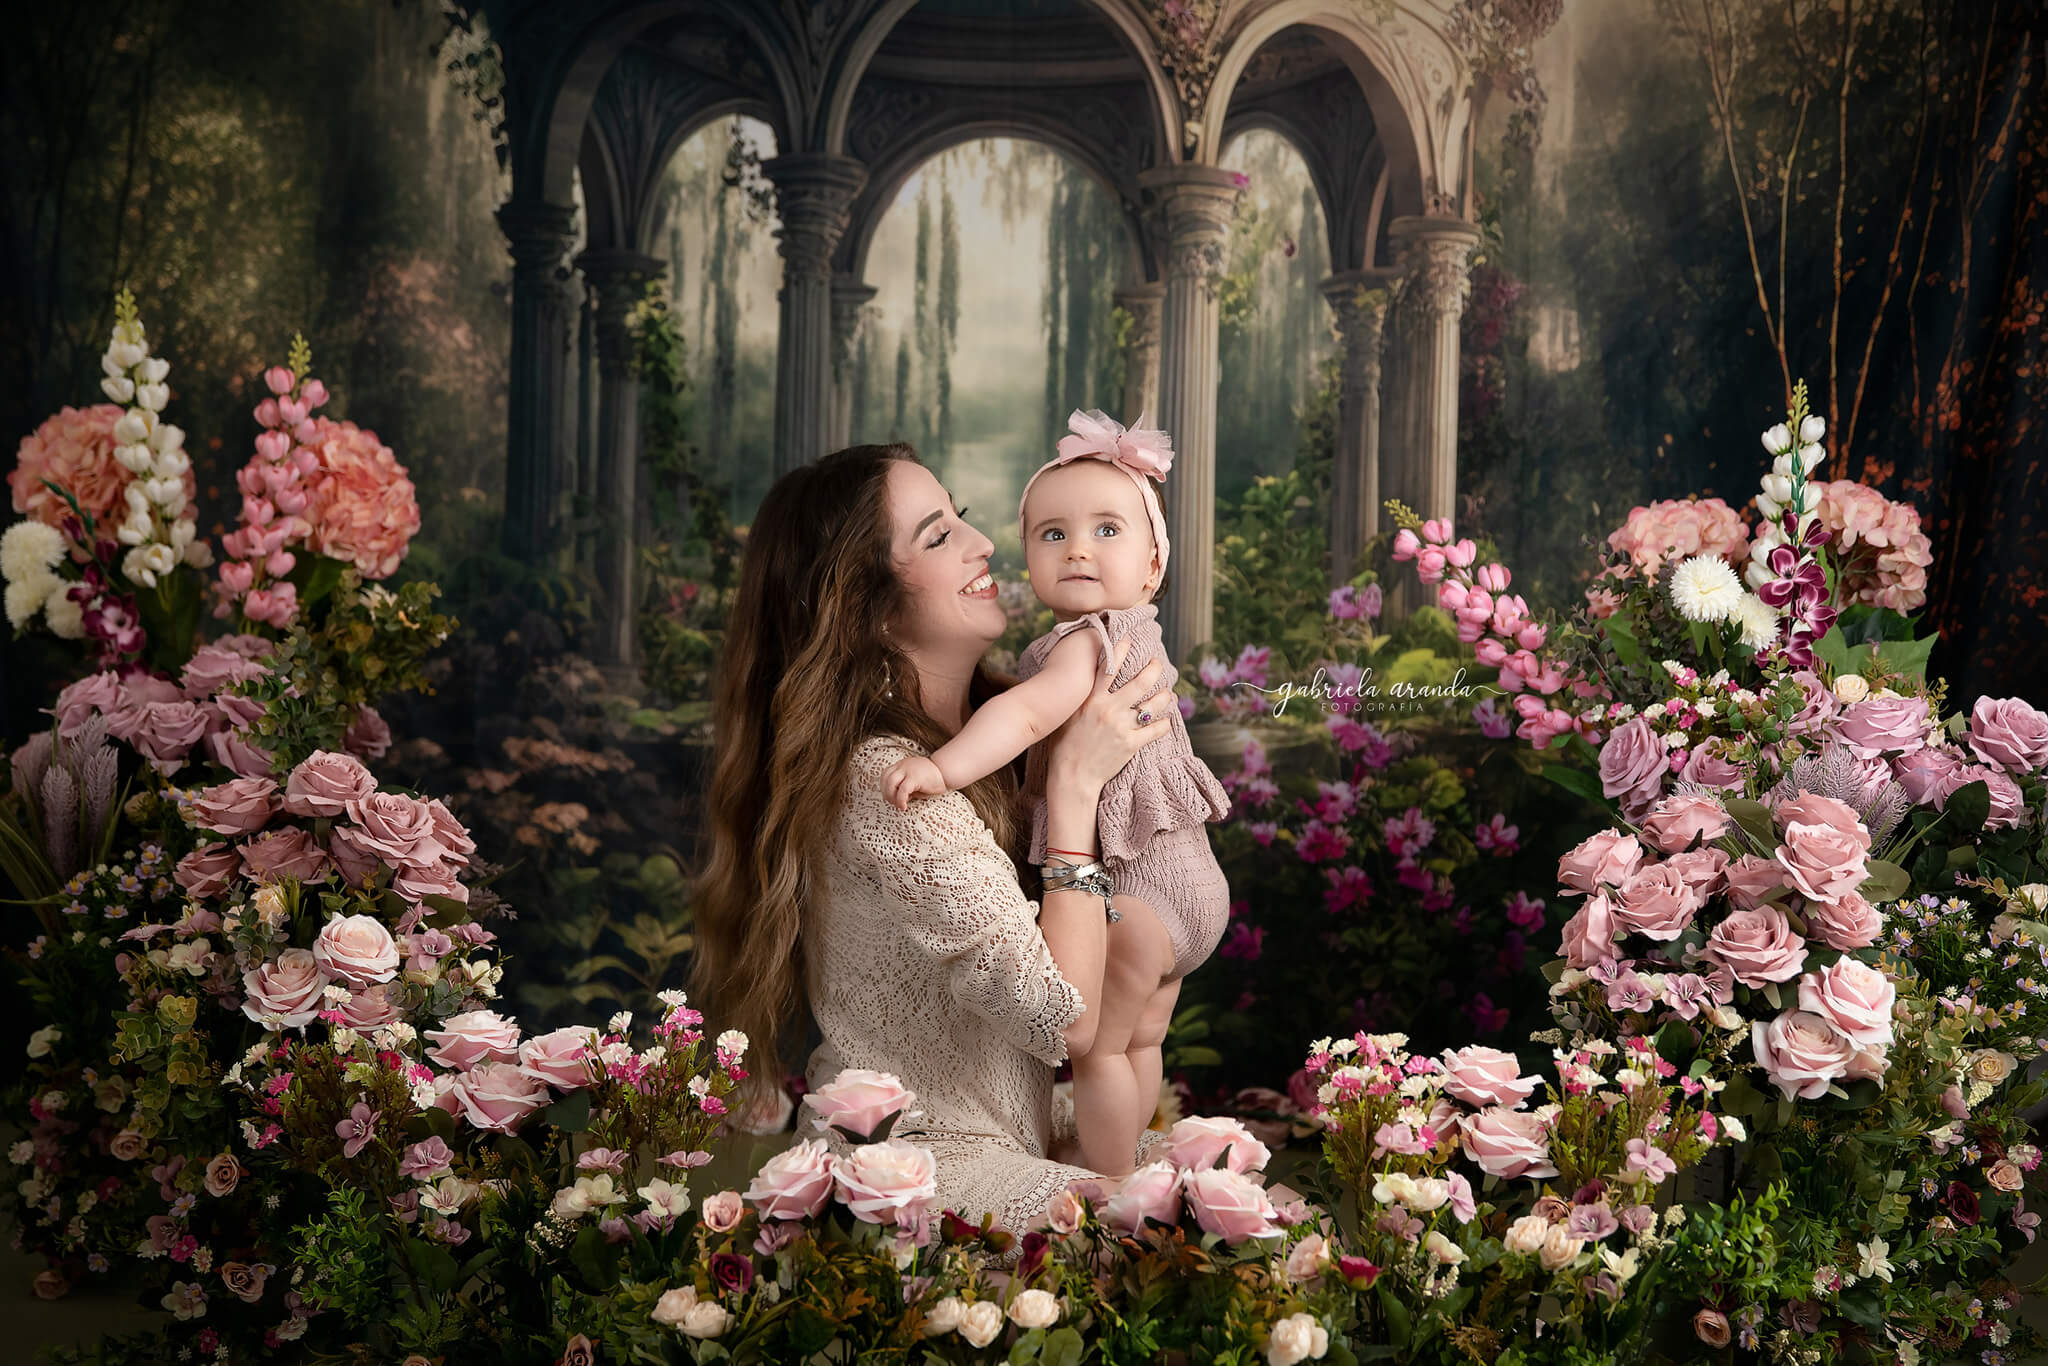 Kate Enchanted Gazebo Spring Fantasy Flower Garden Backdrop Designed by Candice Compton